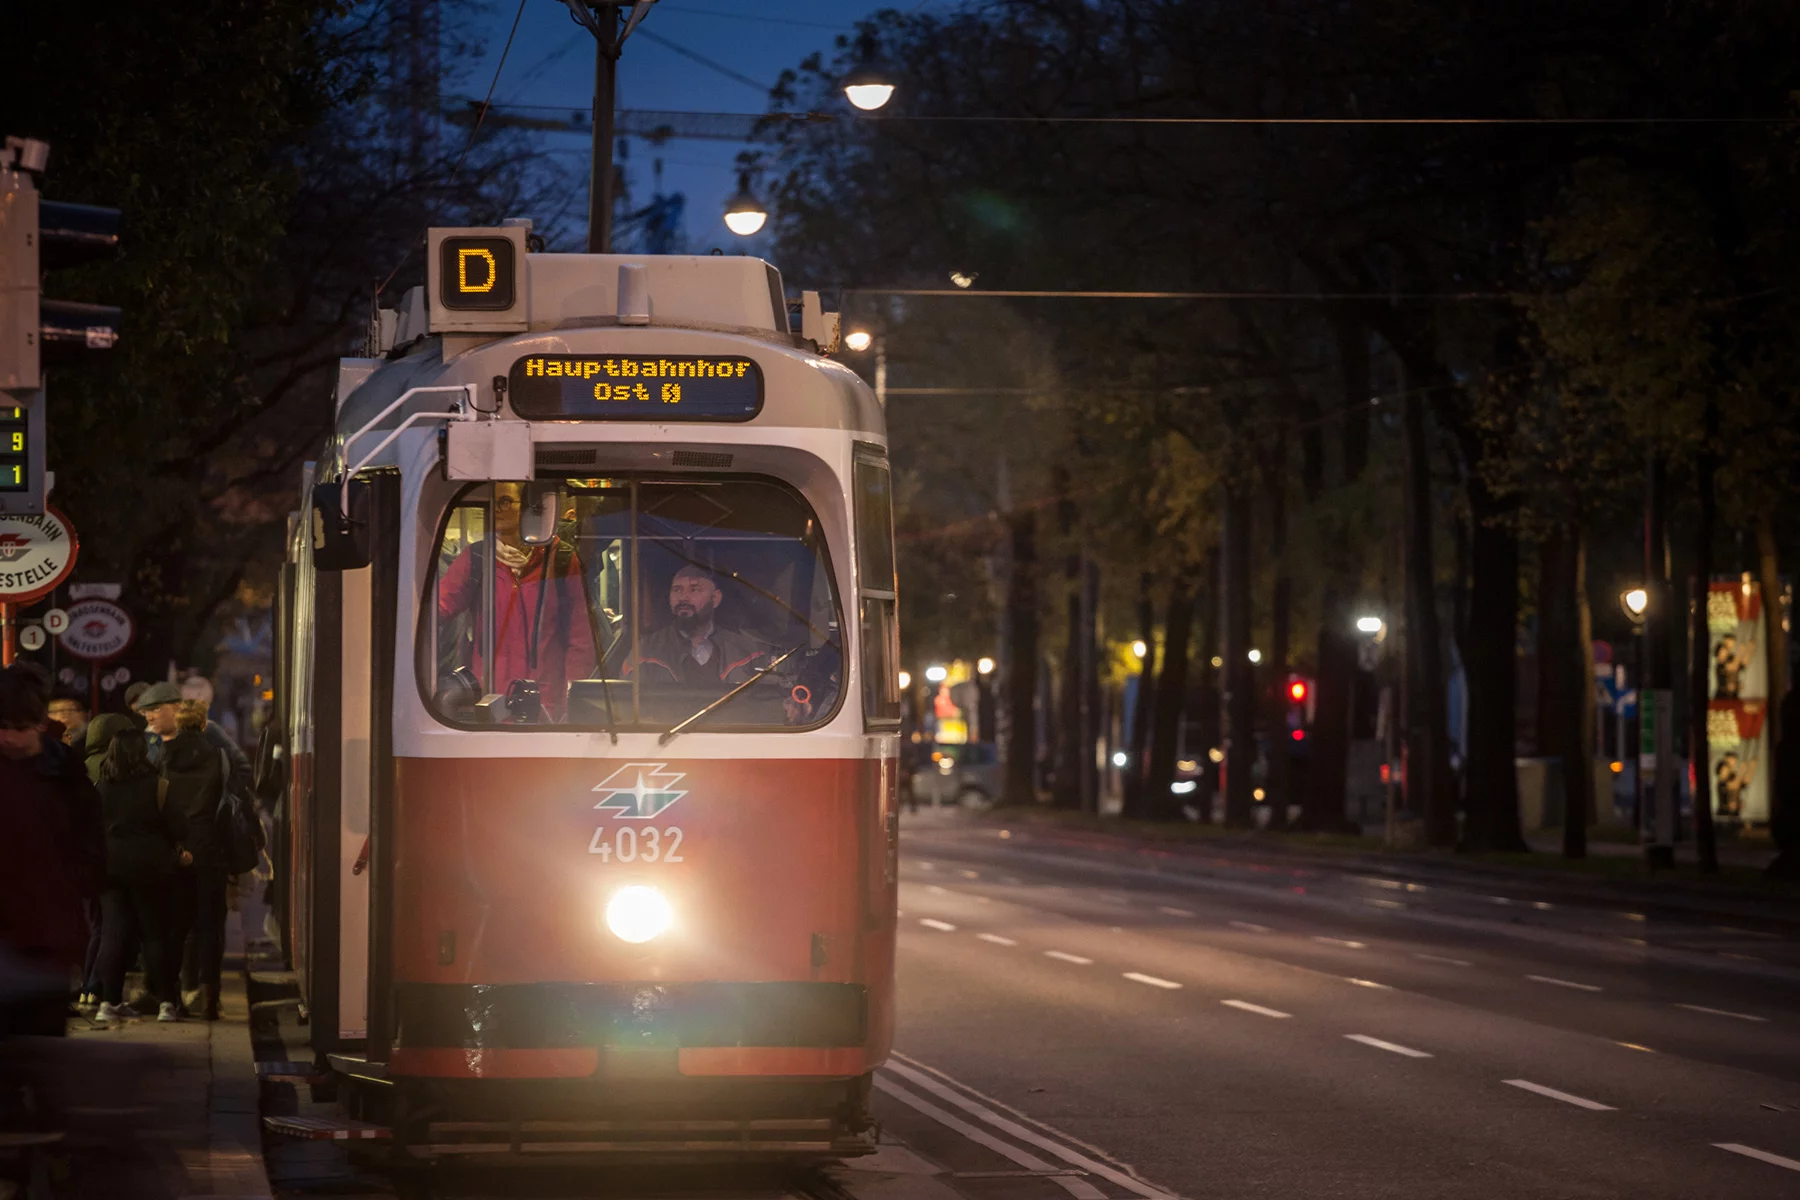 A tram in Vienna at night